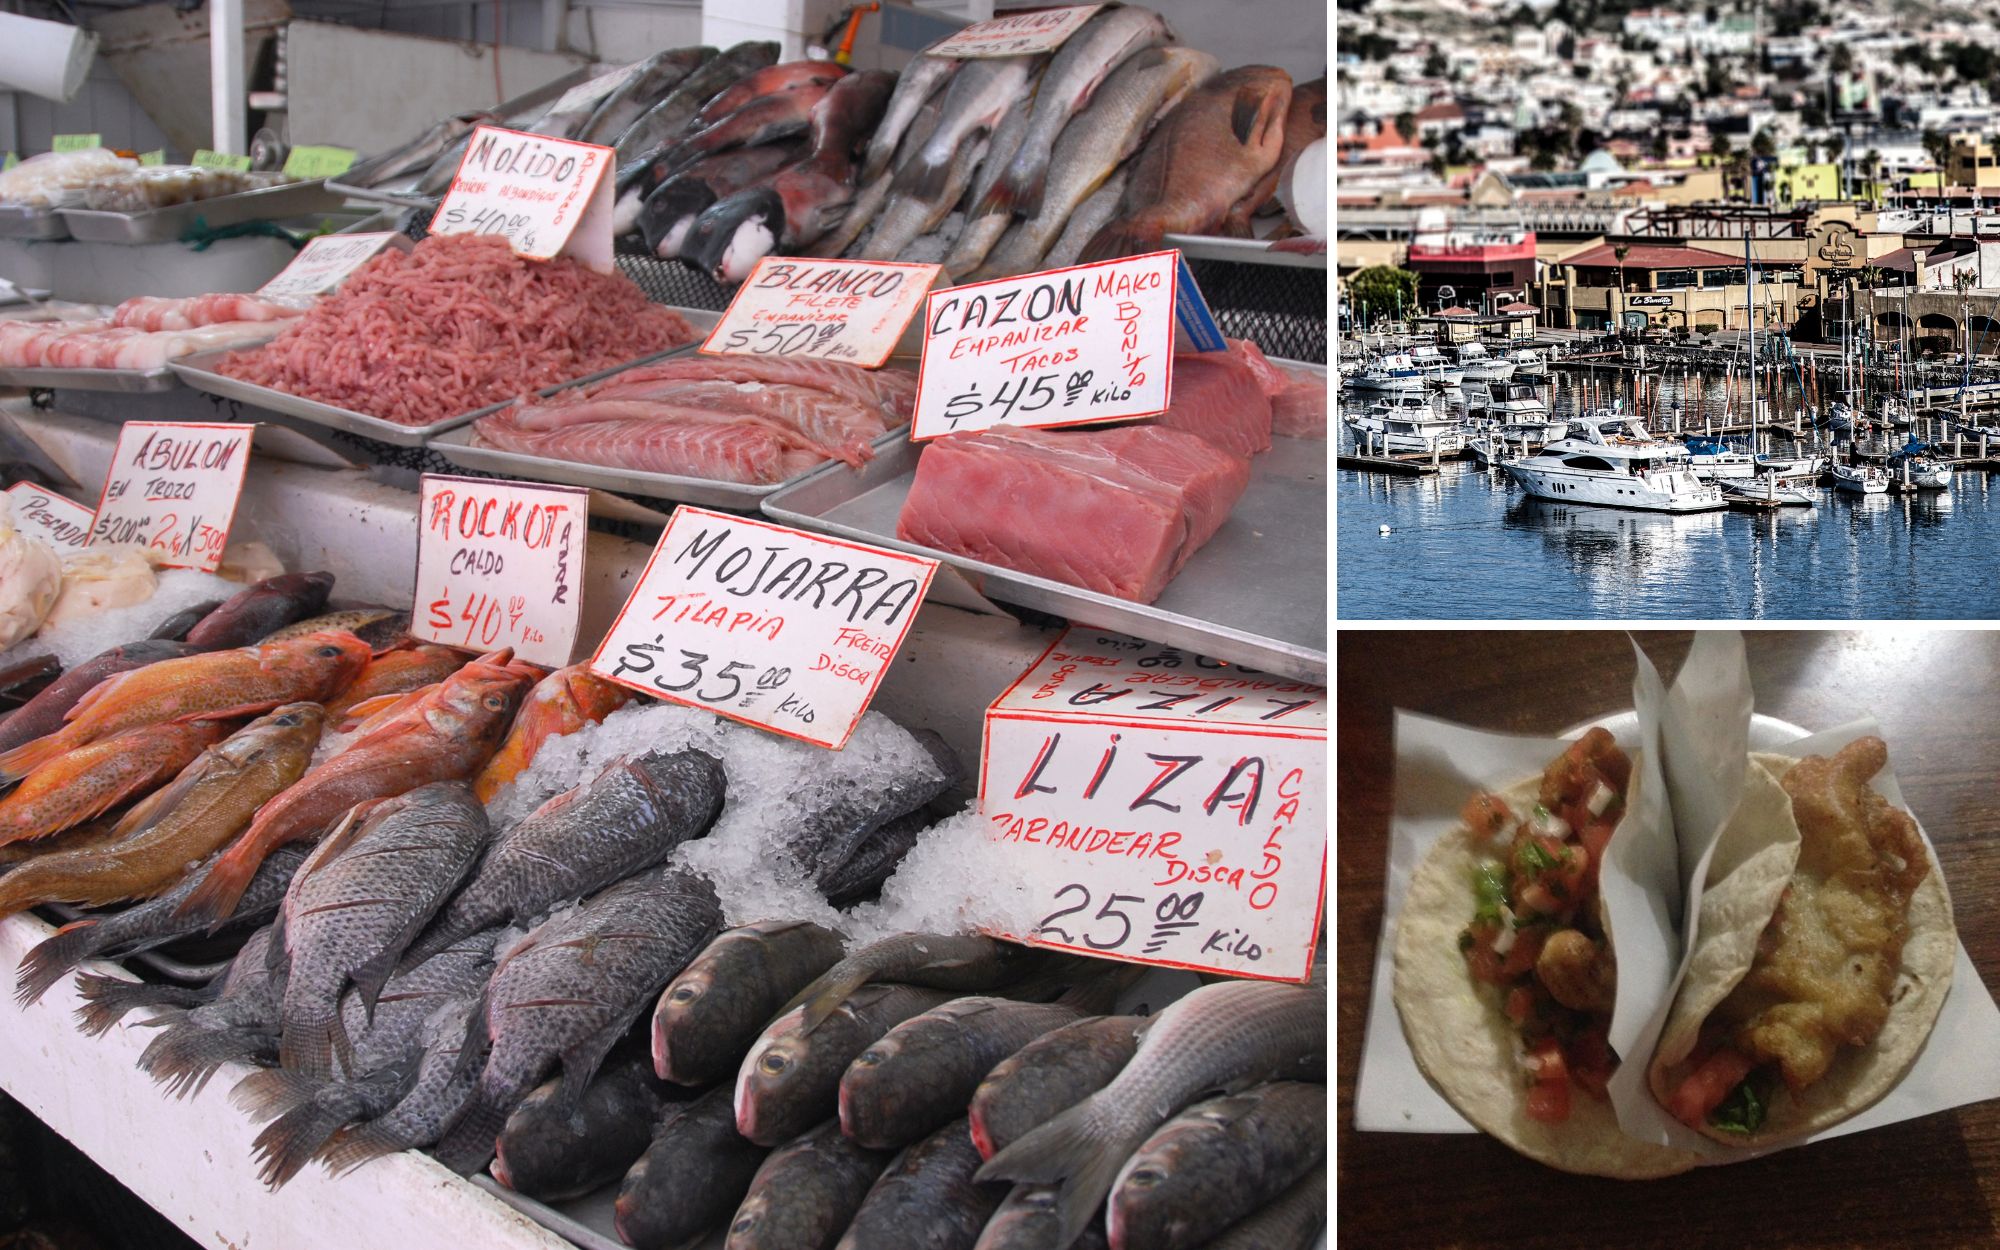 Mercado de Negro in Ensenada for fresh fish